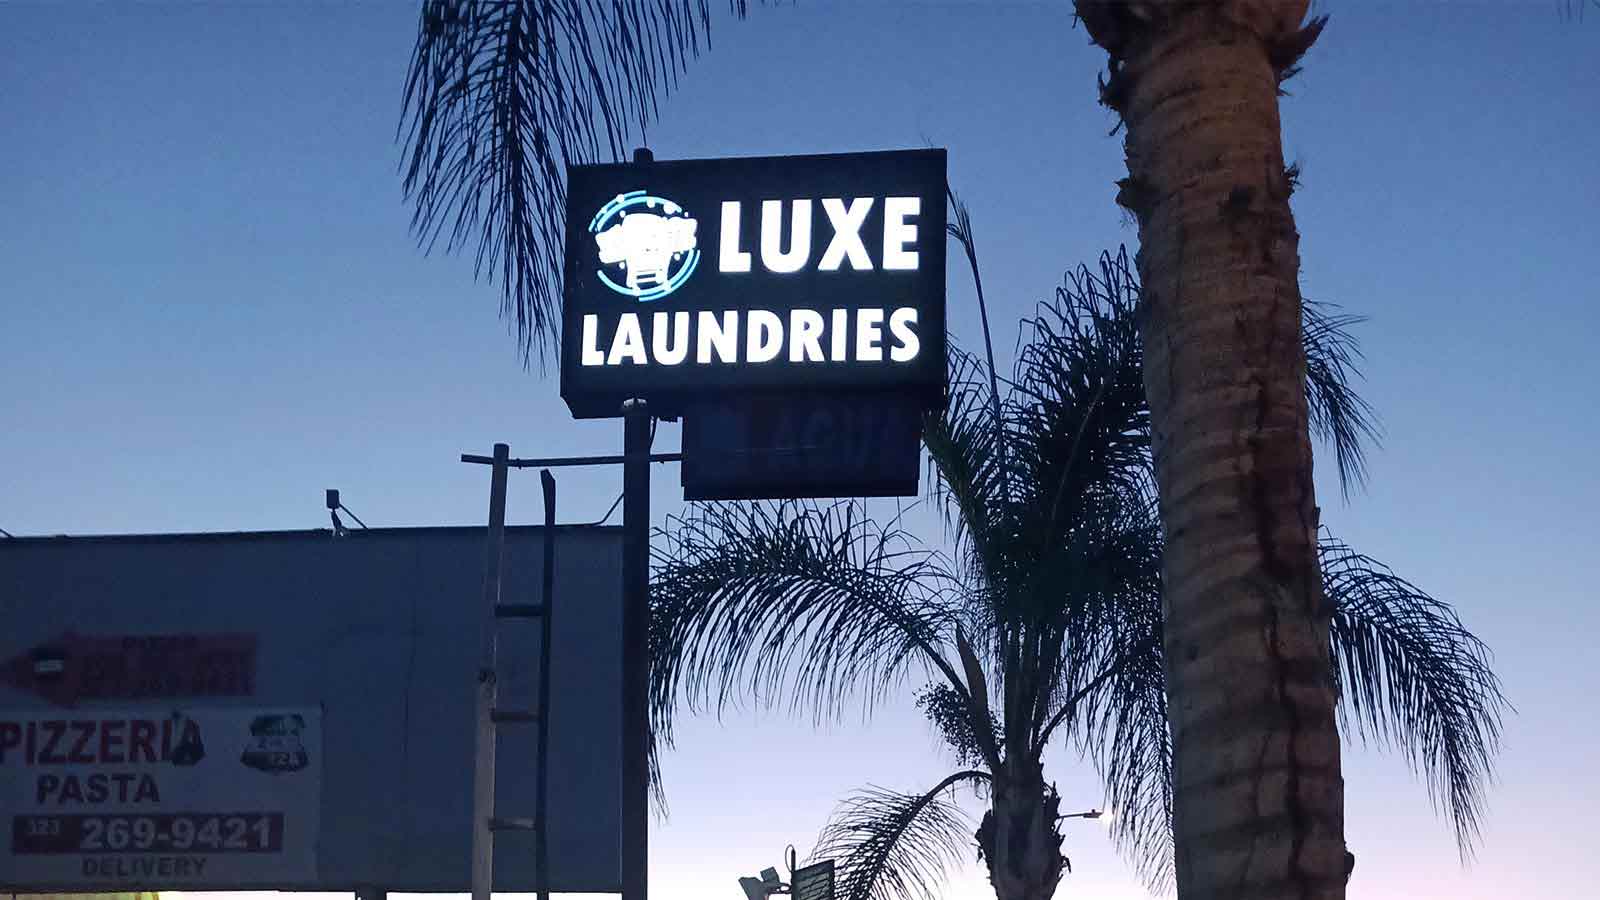 luxe laundries illuminated promotional pylon sign